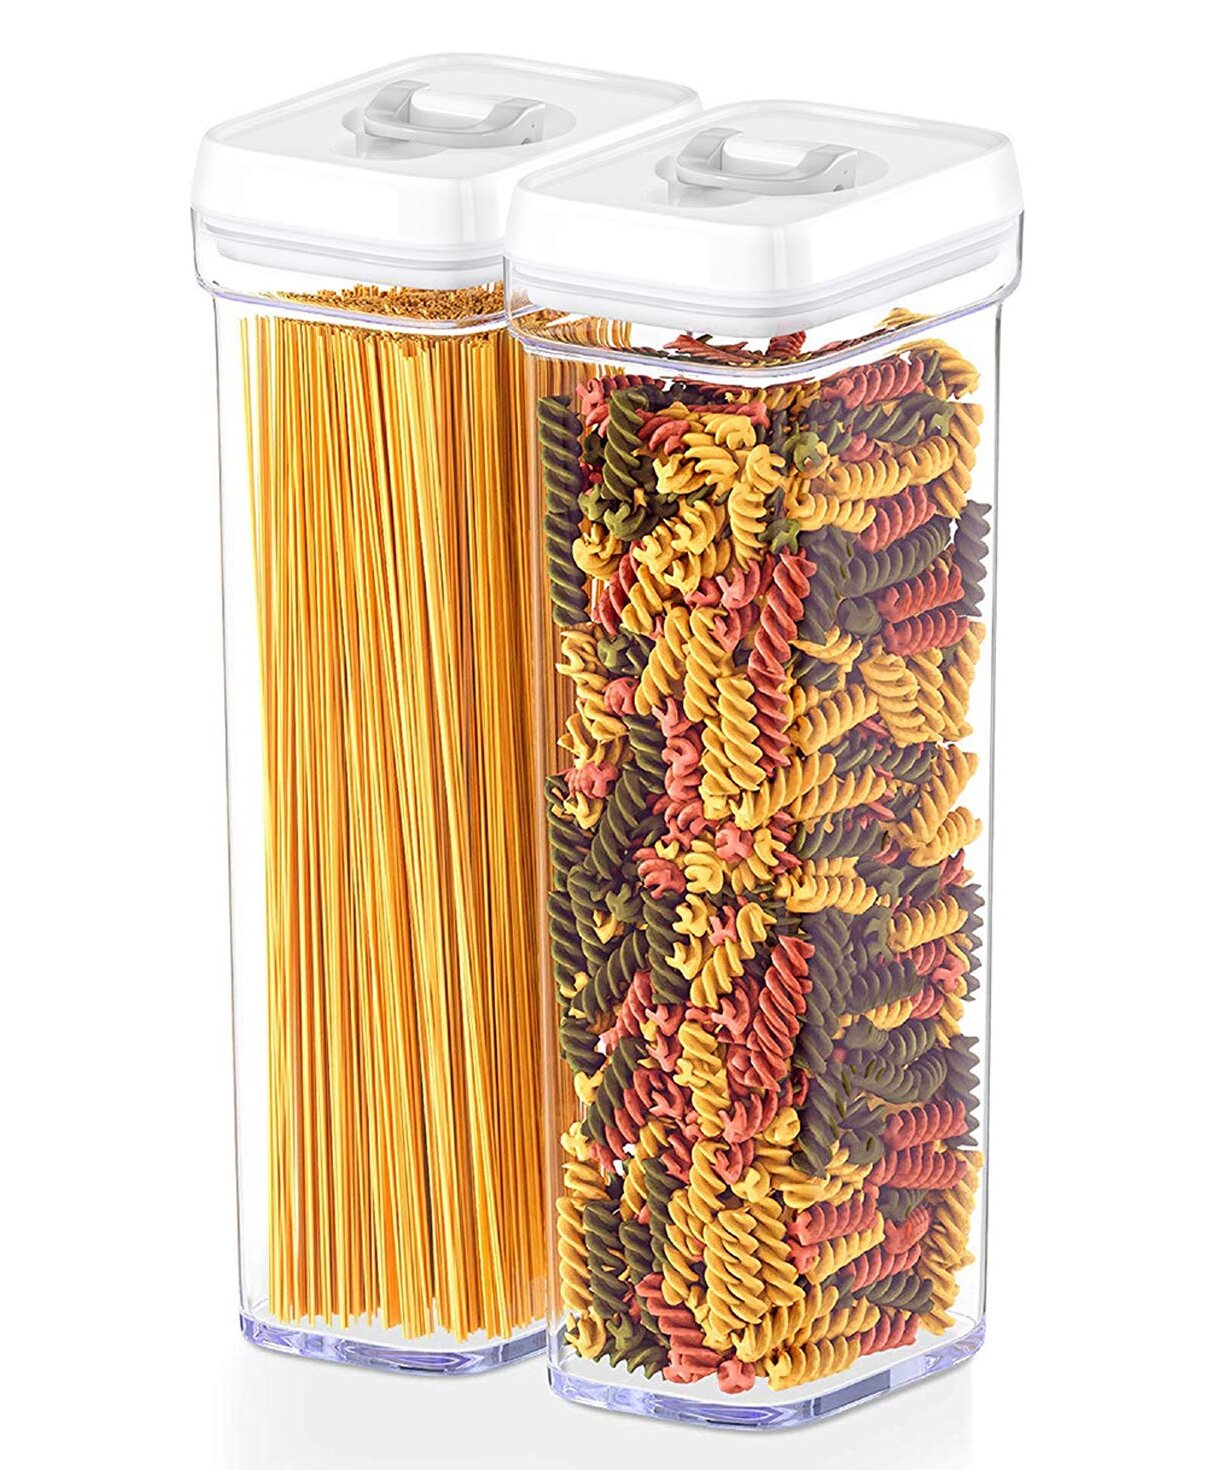 Prep & Savour 2 Container Food Storage Set & Reviews | Wayfair